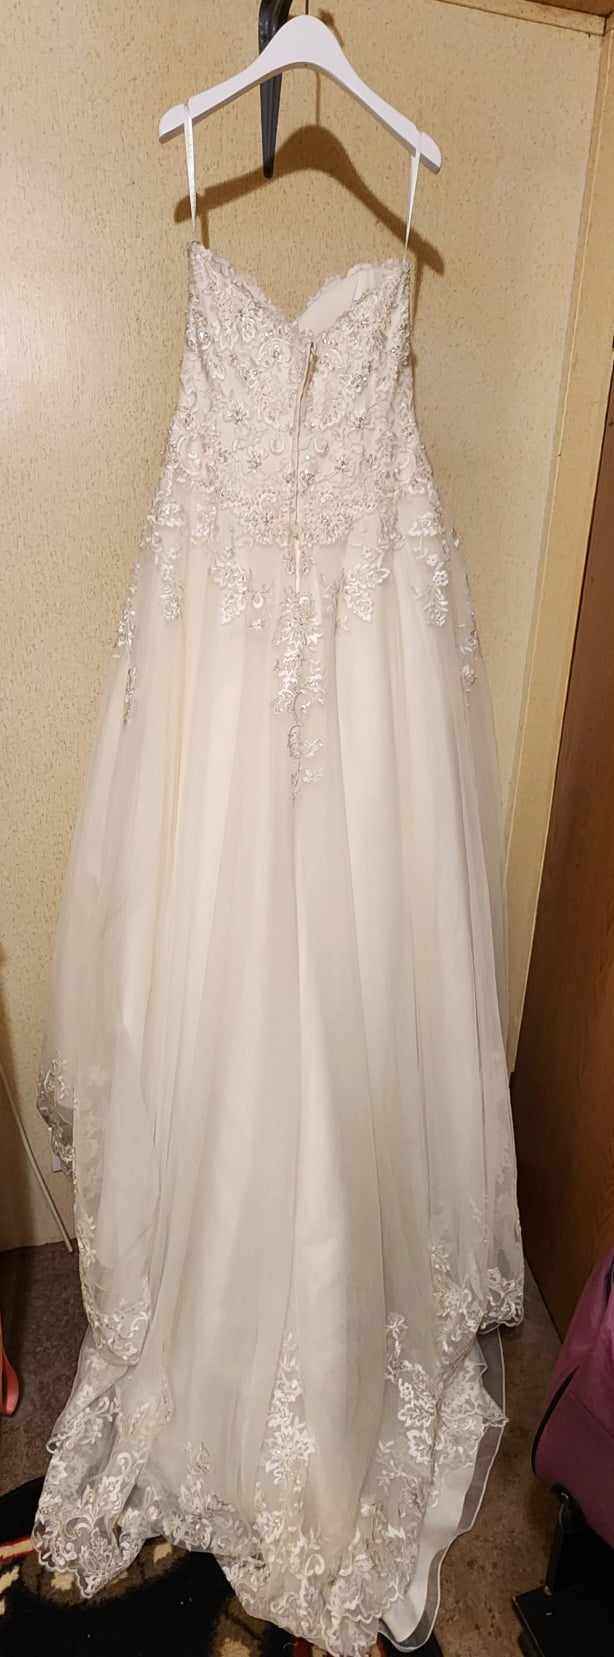 My wedding dress - 1